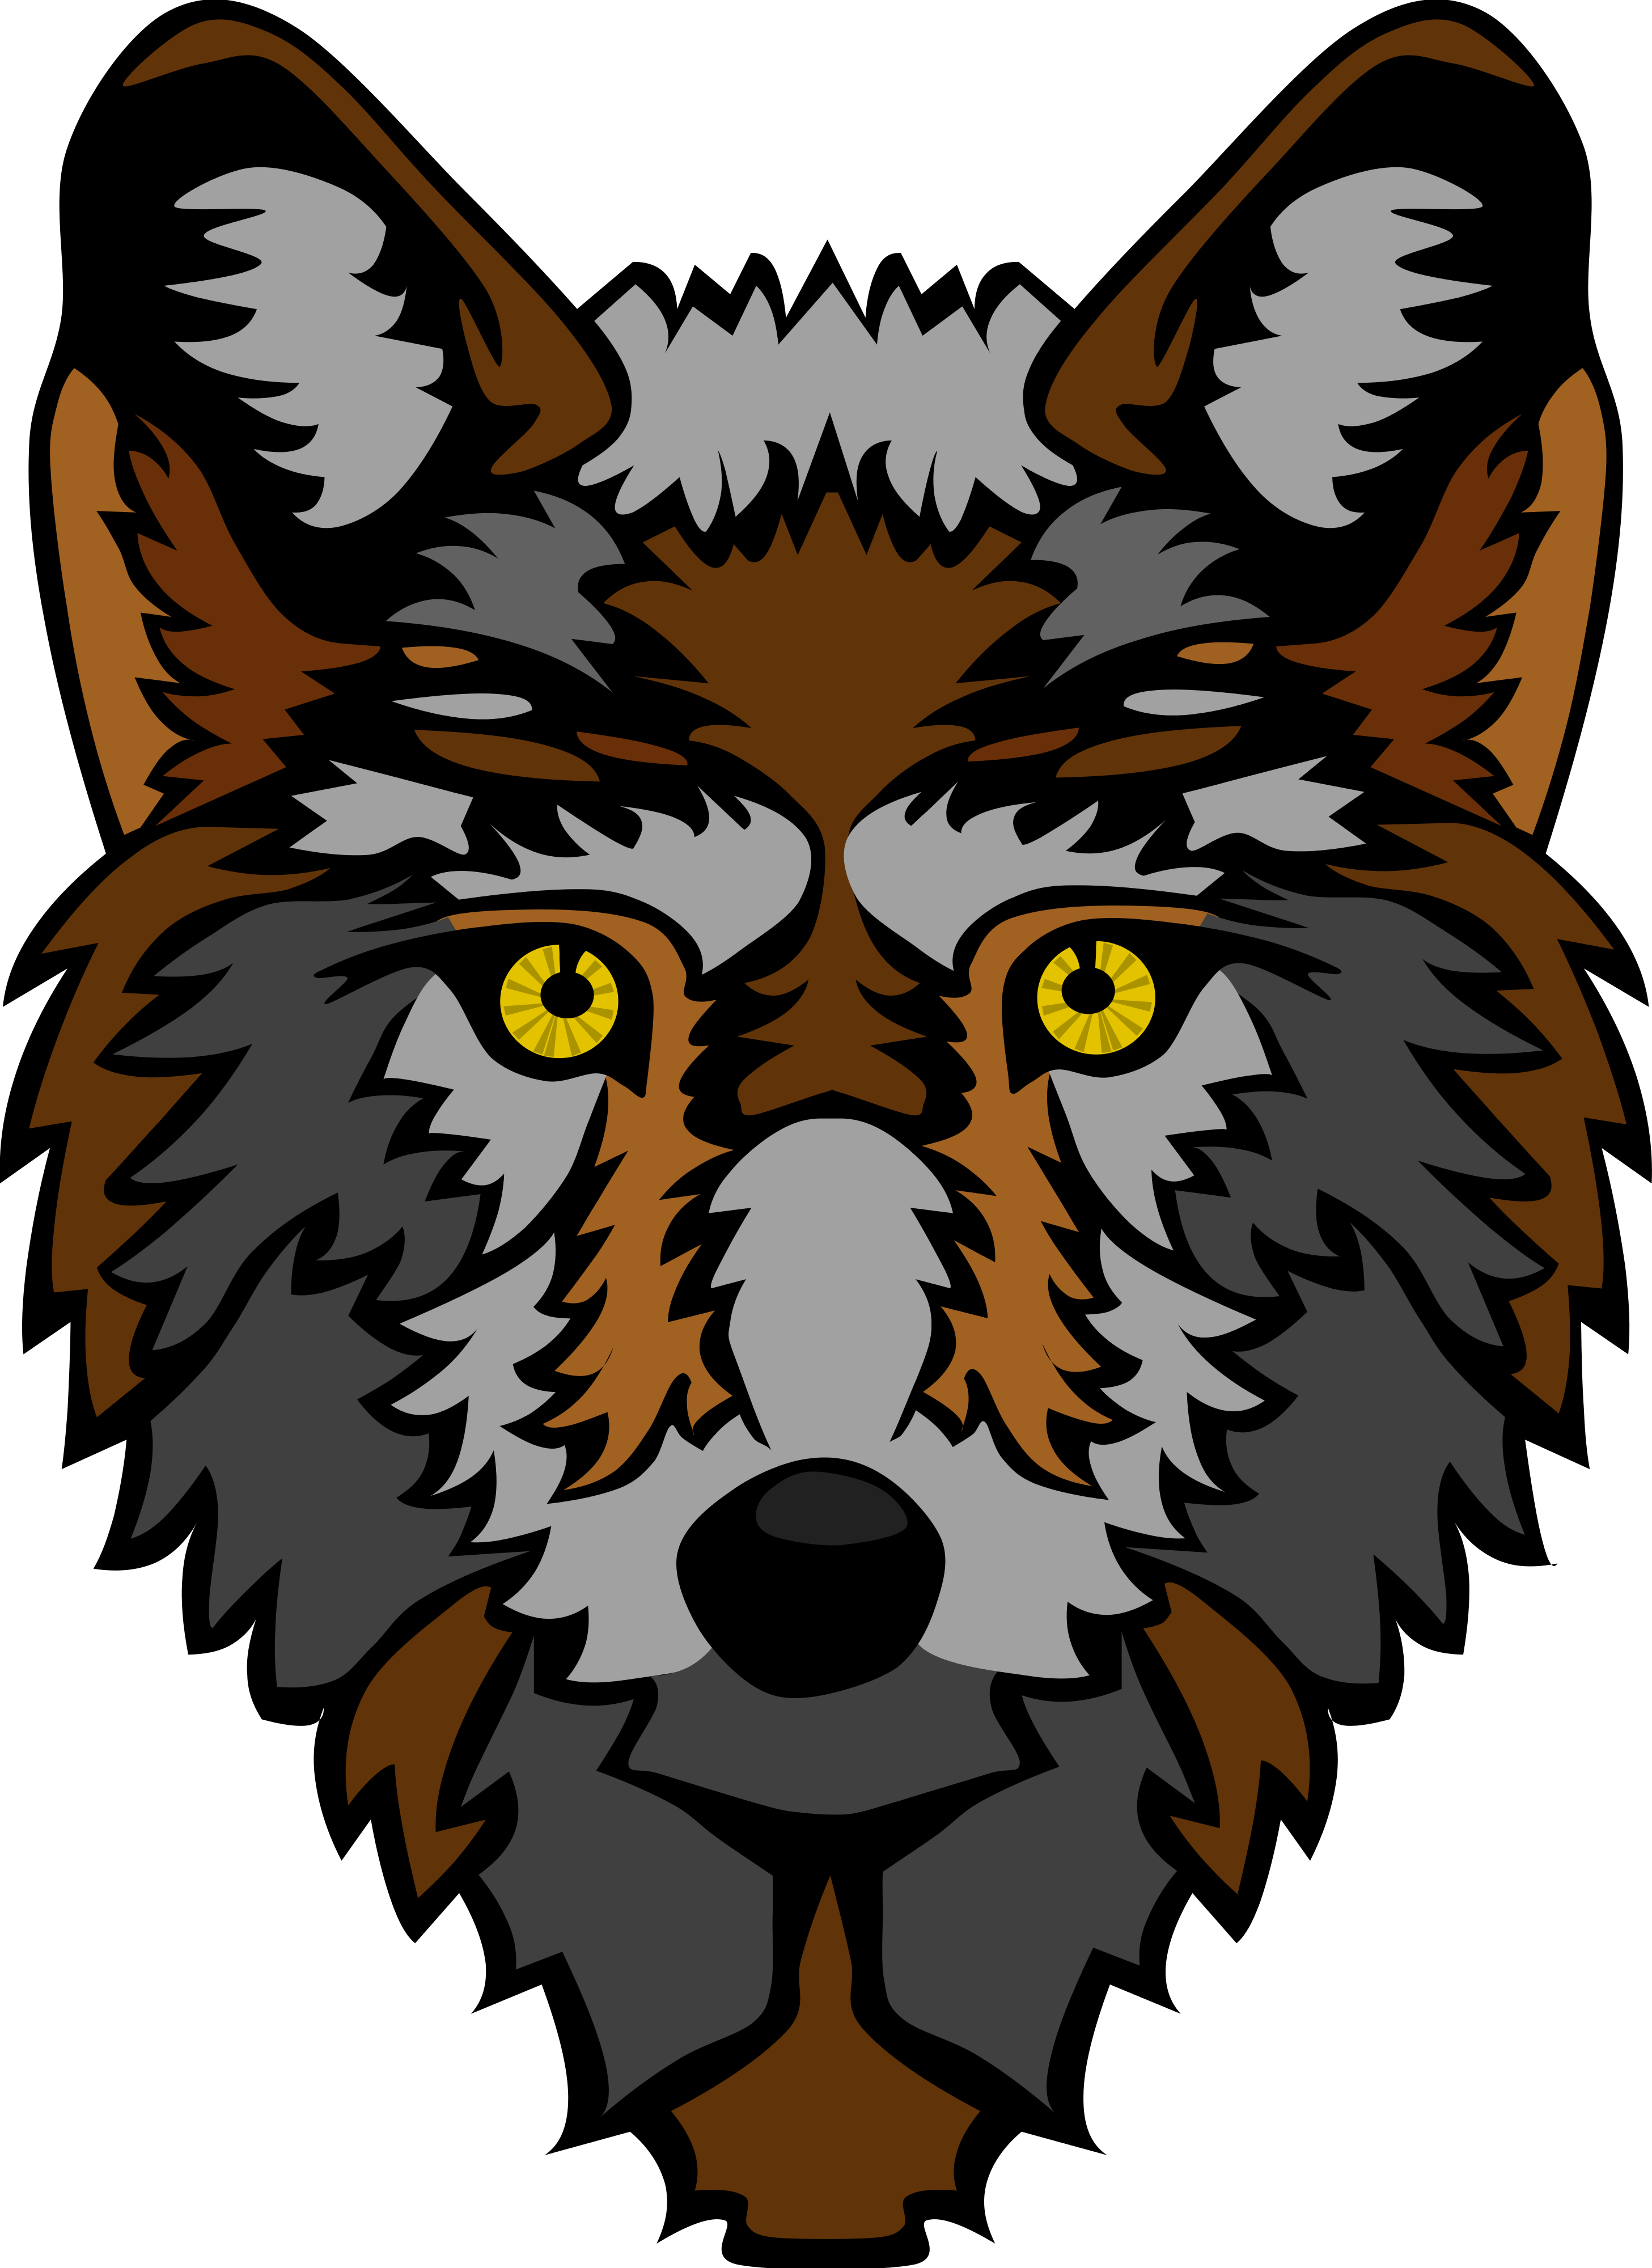 werewolf | Many Interesting Facts